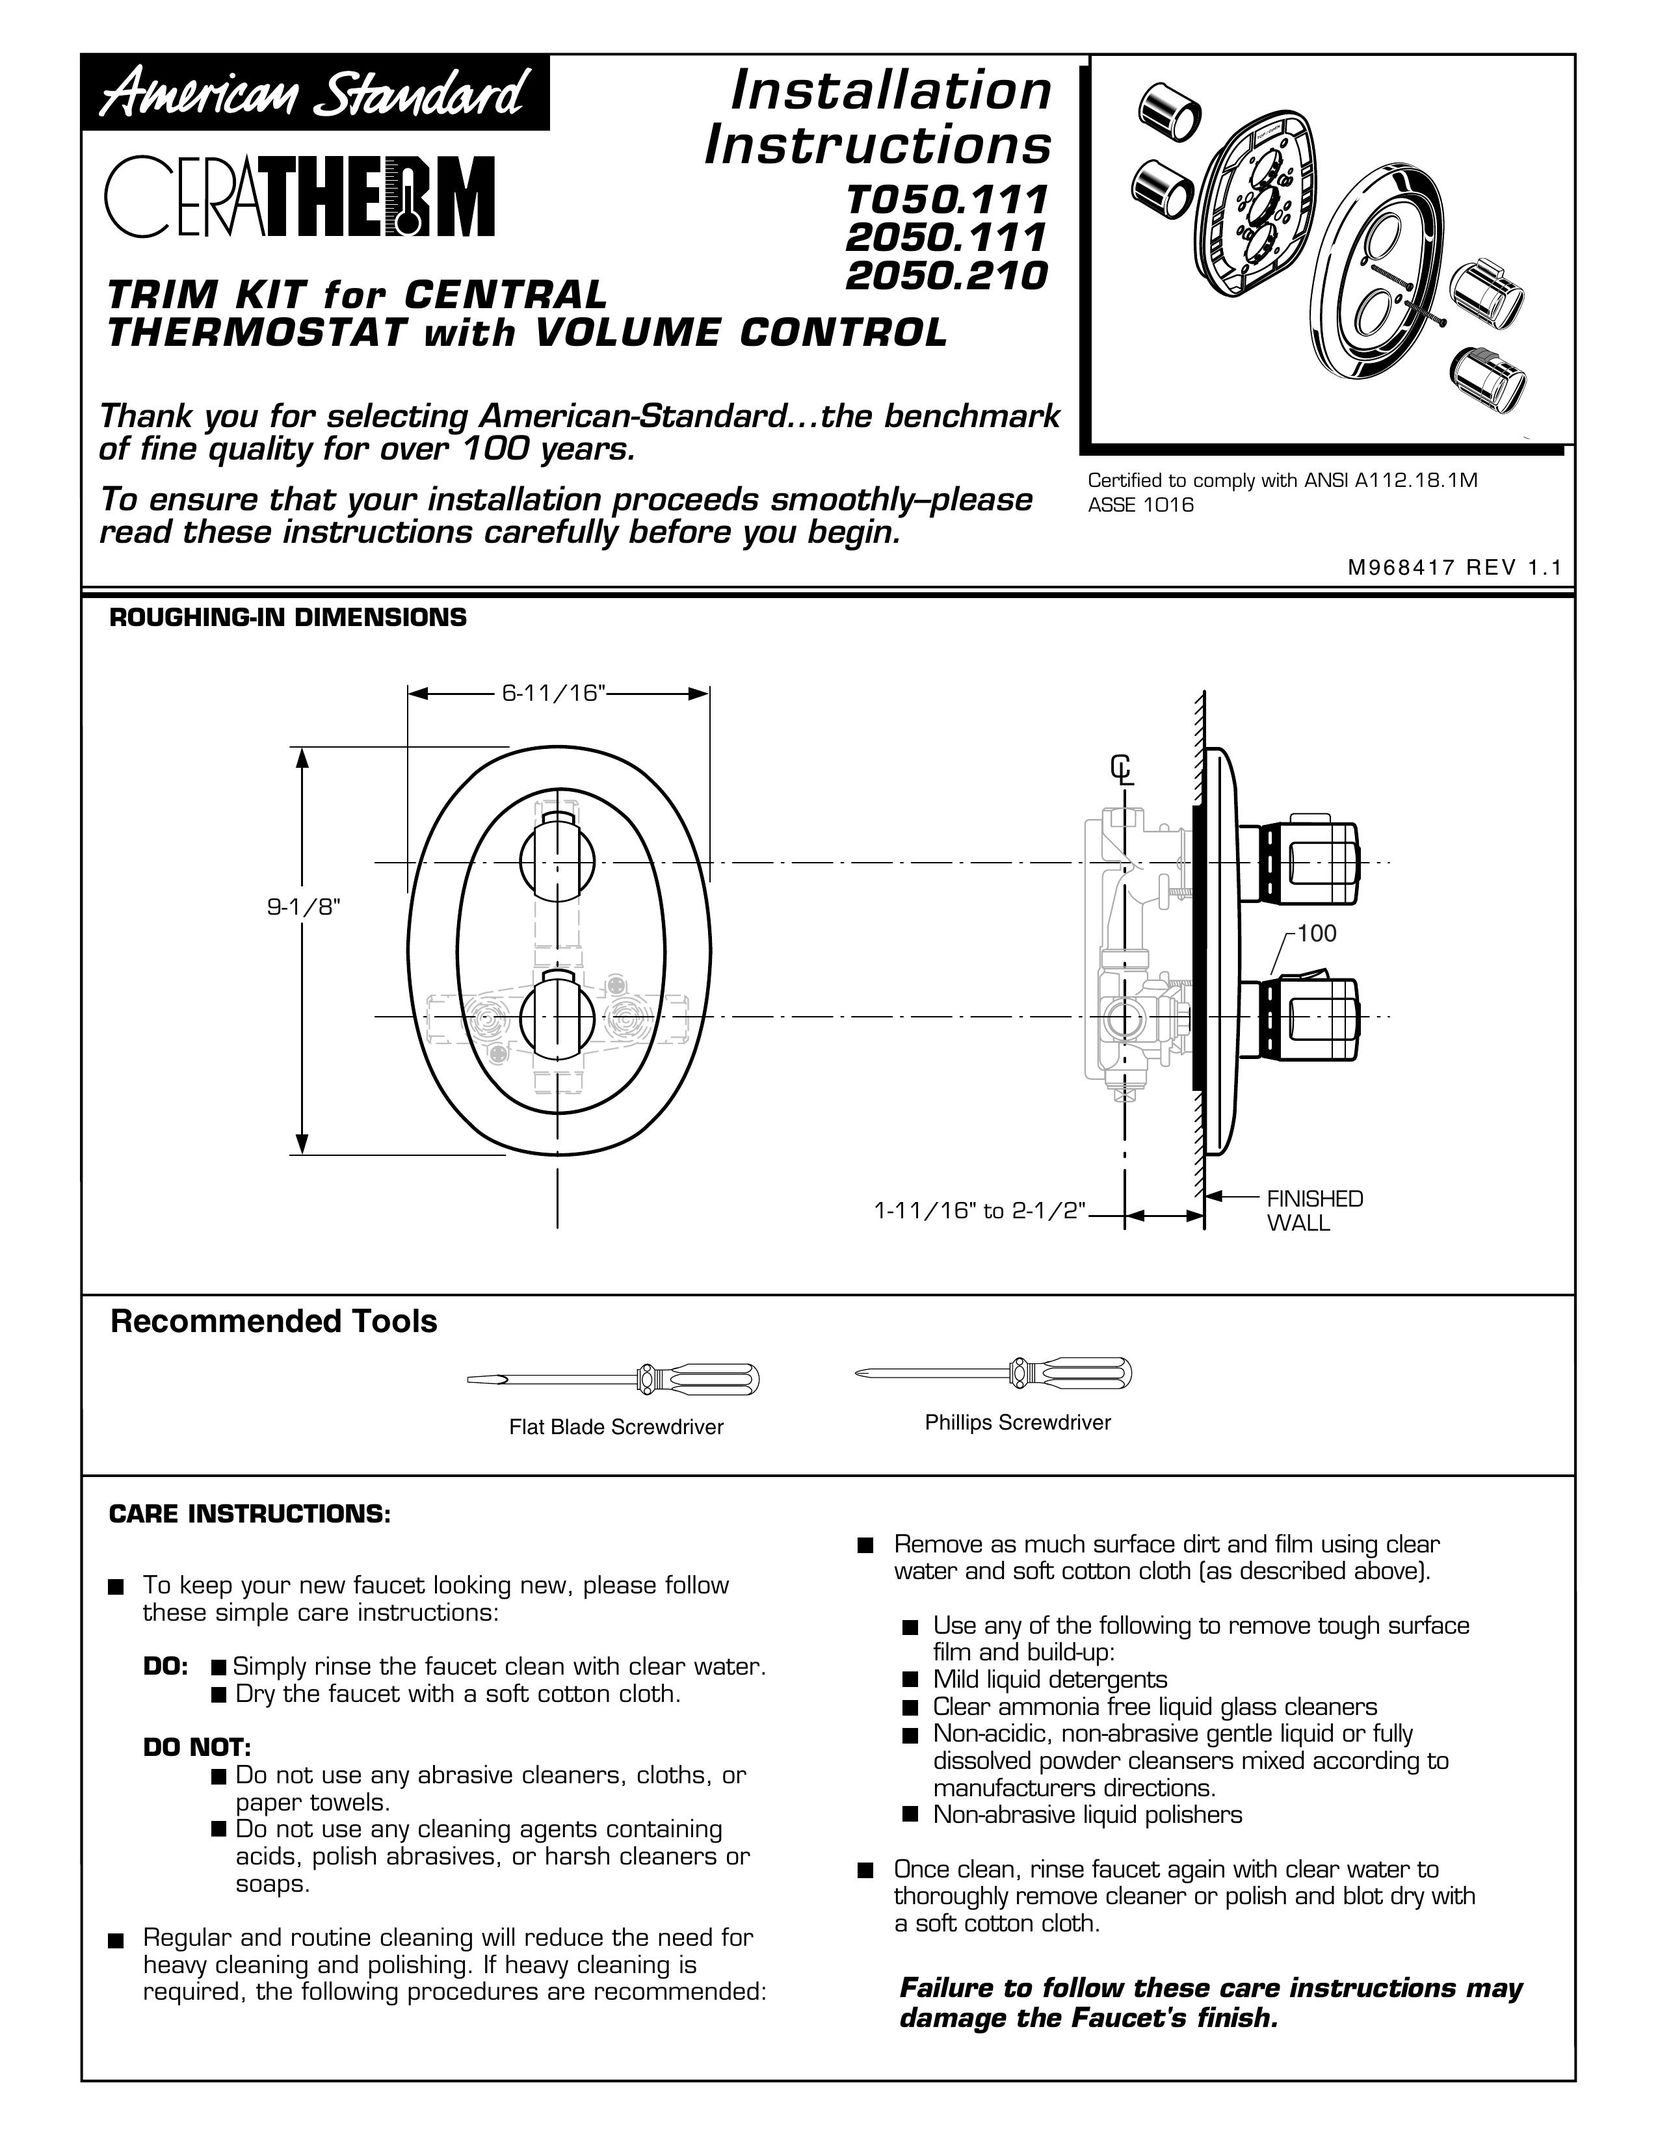 American Standard 2050.210 Thermostat User Manual